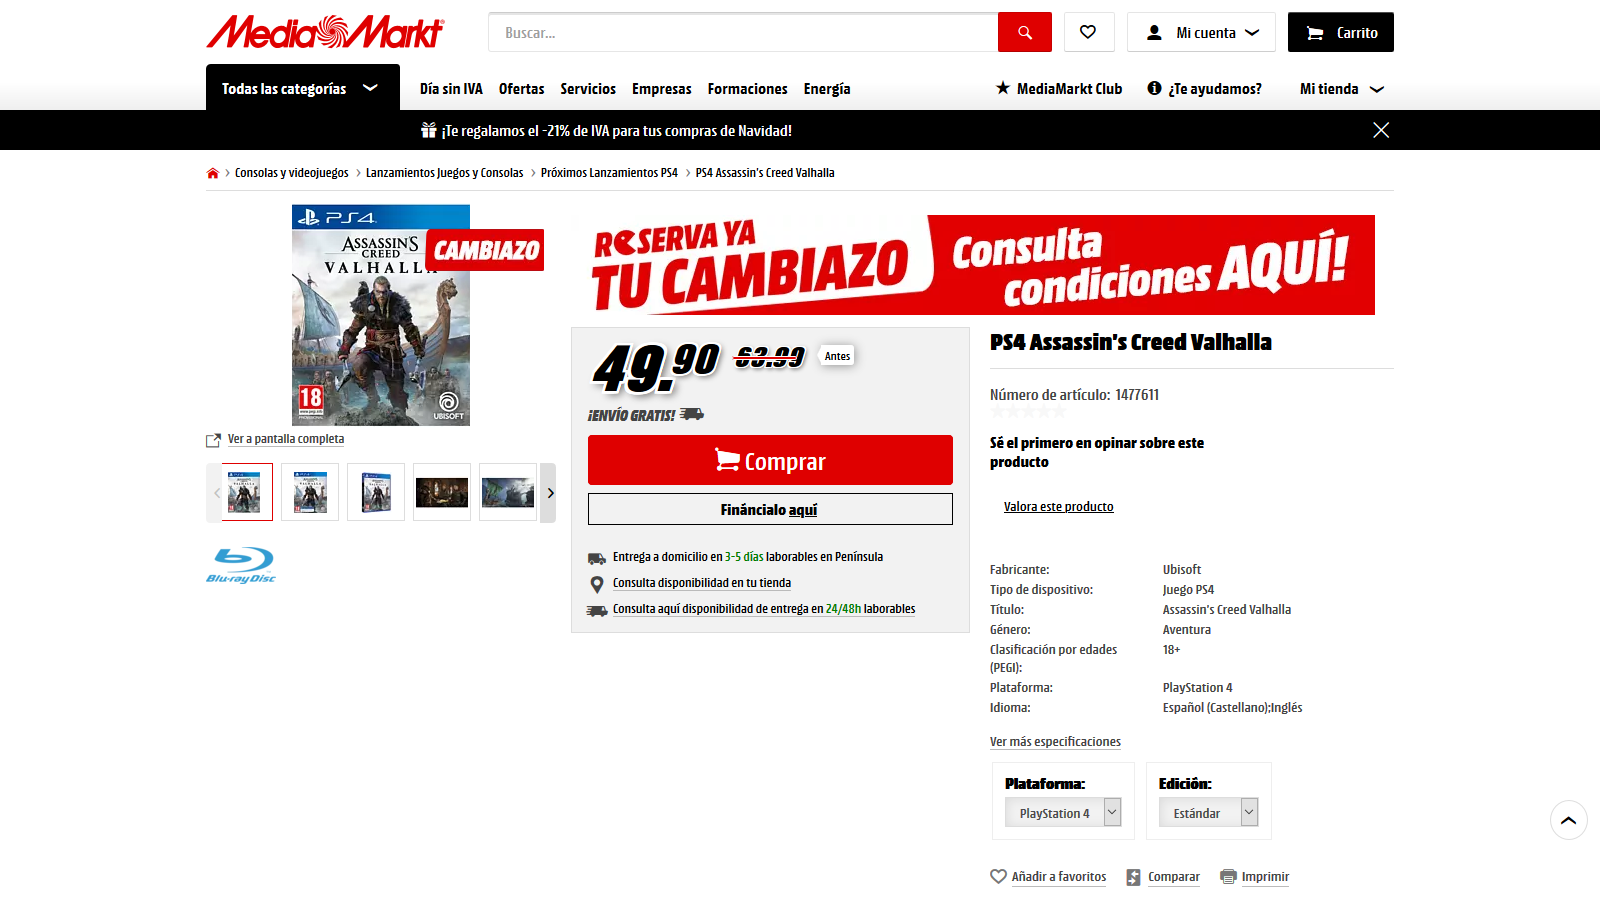 Cambiazo Media Markt para Assassin’s Creed Valhalla por 49.90€